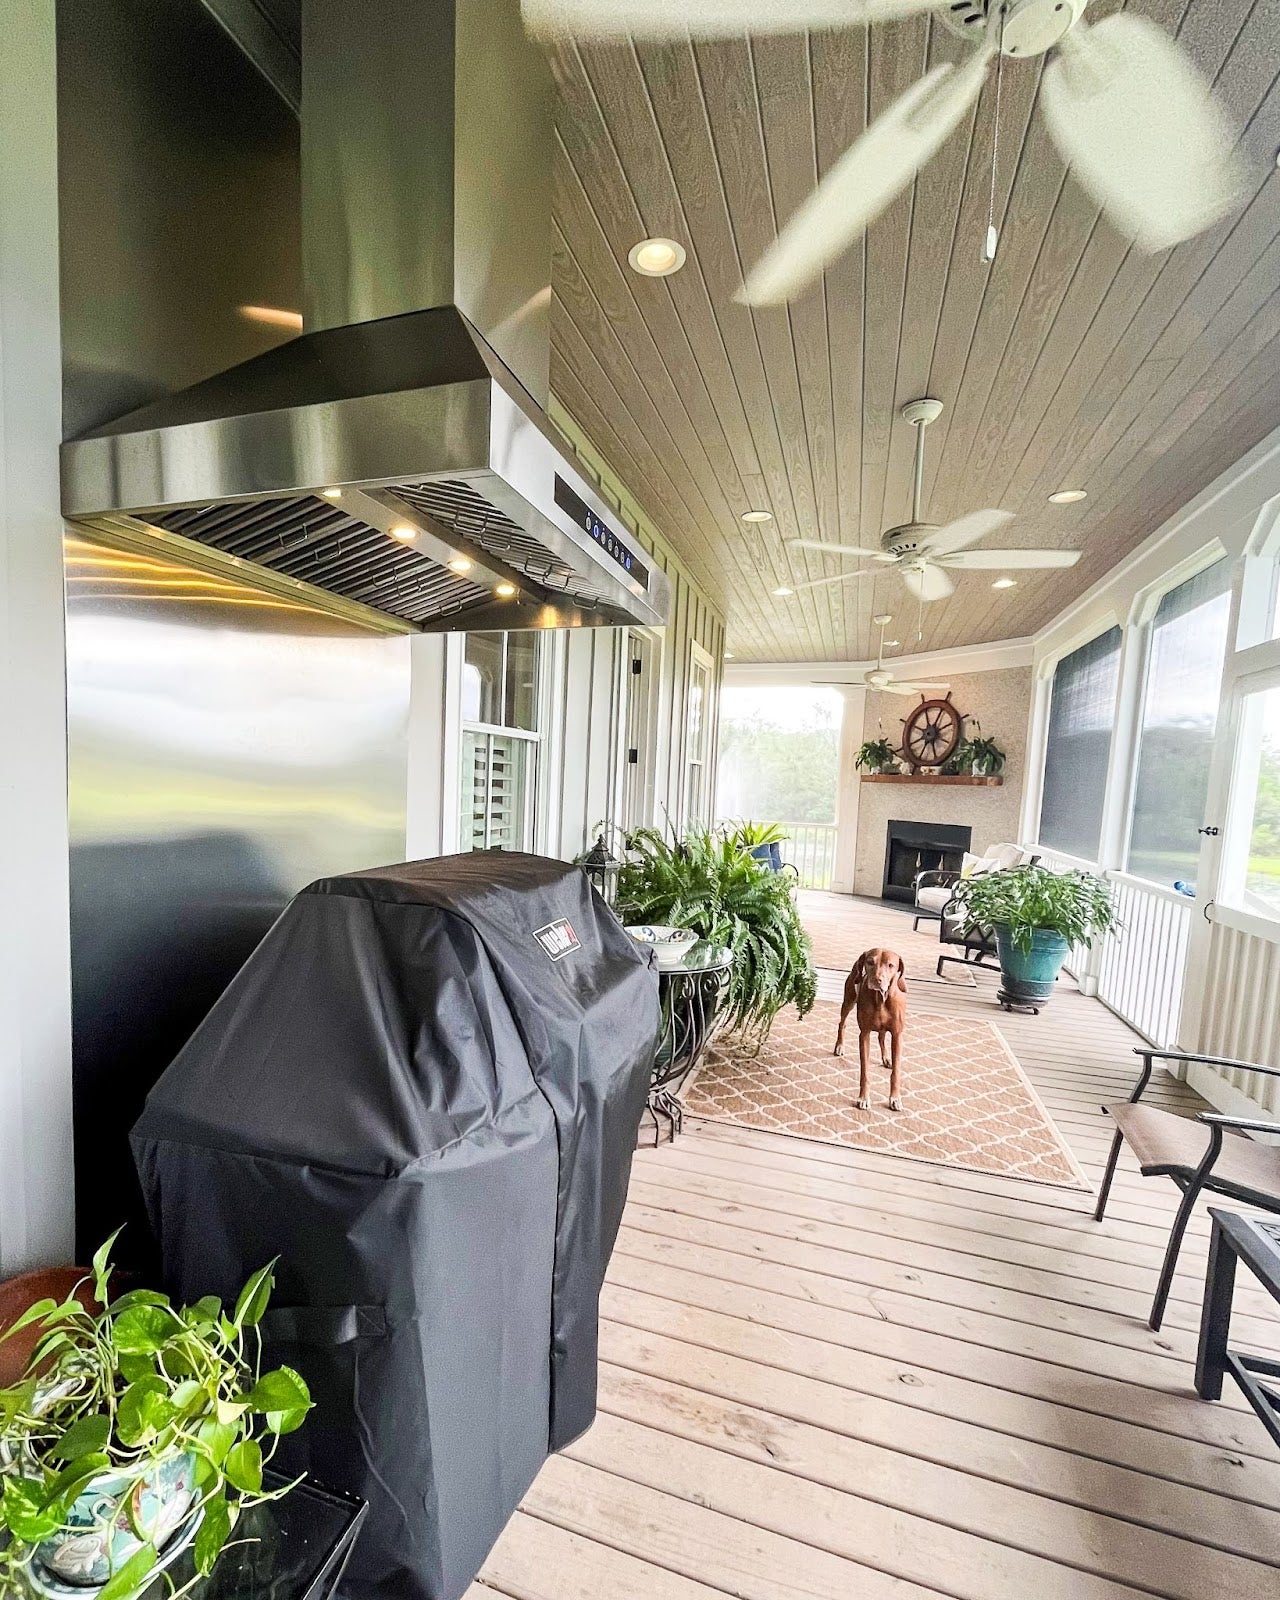 Proline range hood on a welcoming porch with wooden flooring and a pet dog standing guard - prolinerangehoods.com